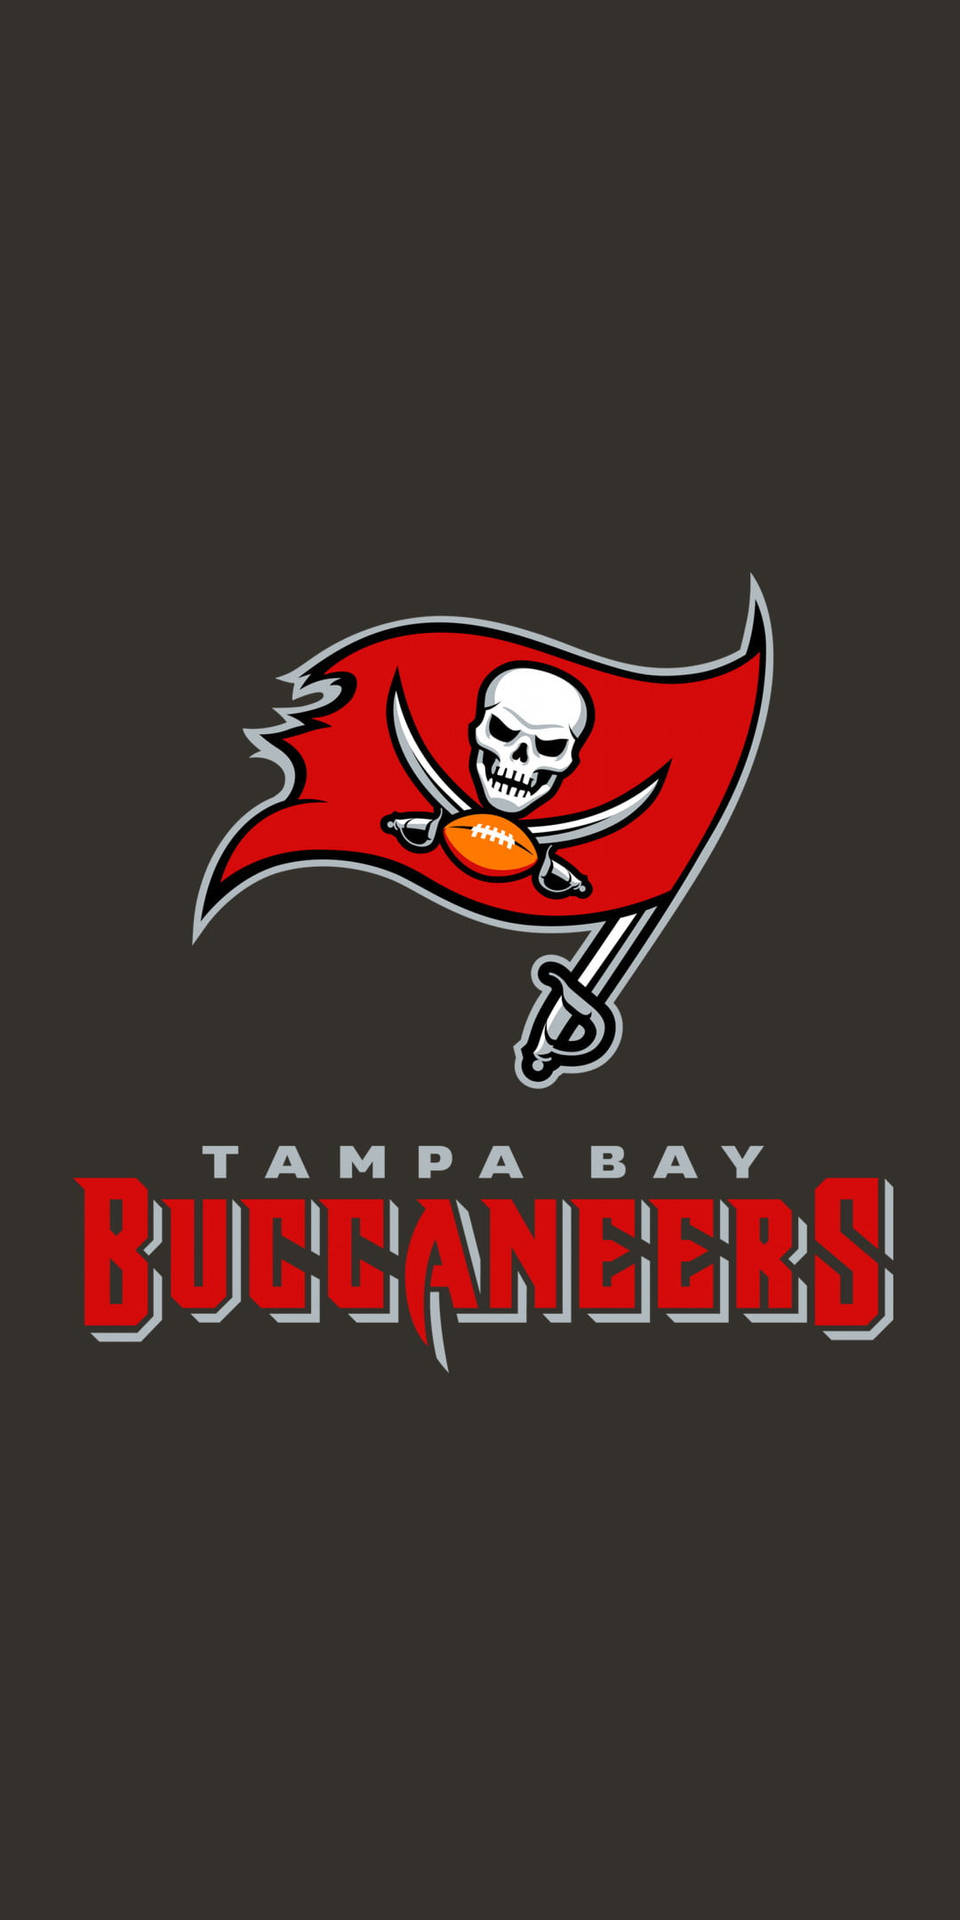 Buccaneers Nfl Team Logo Background